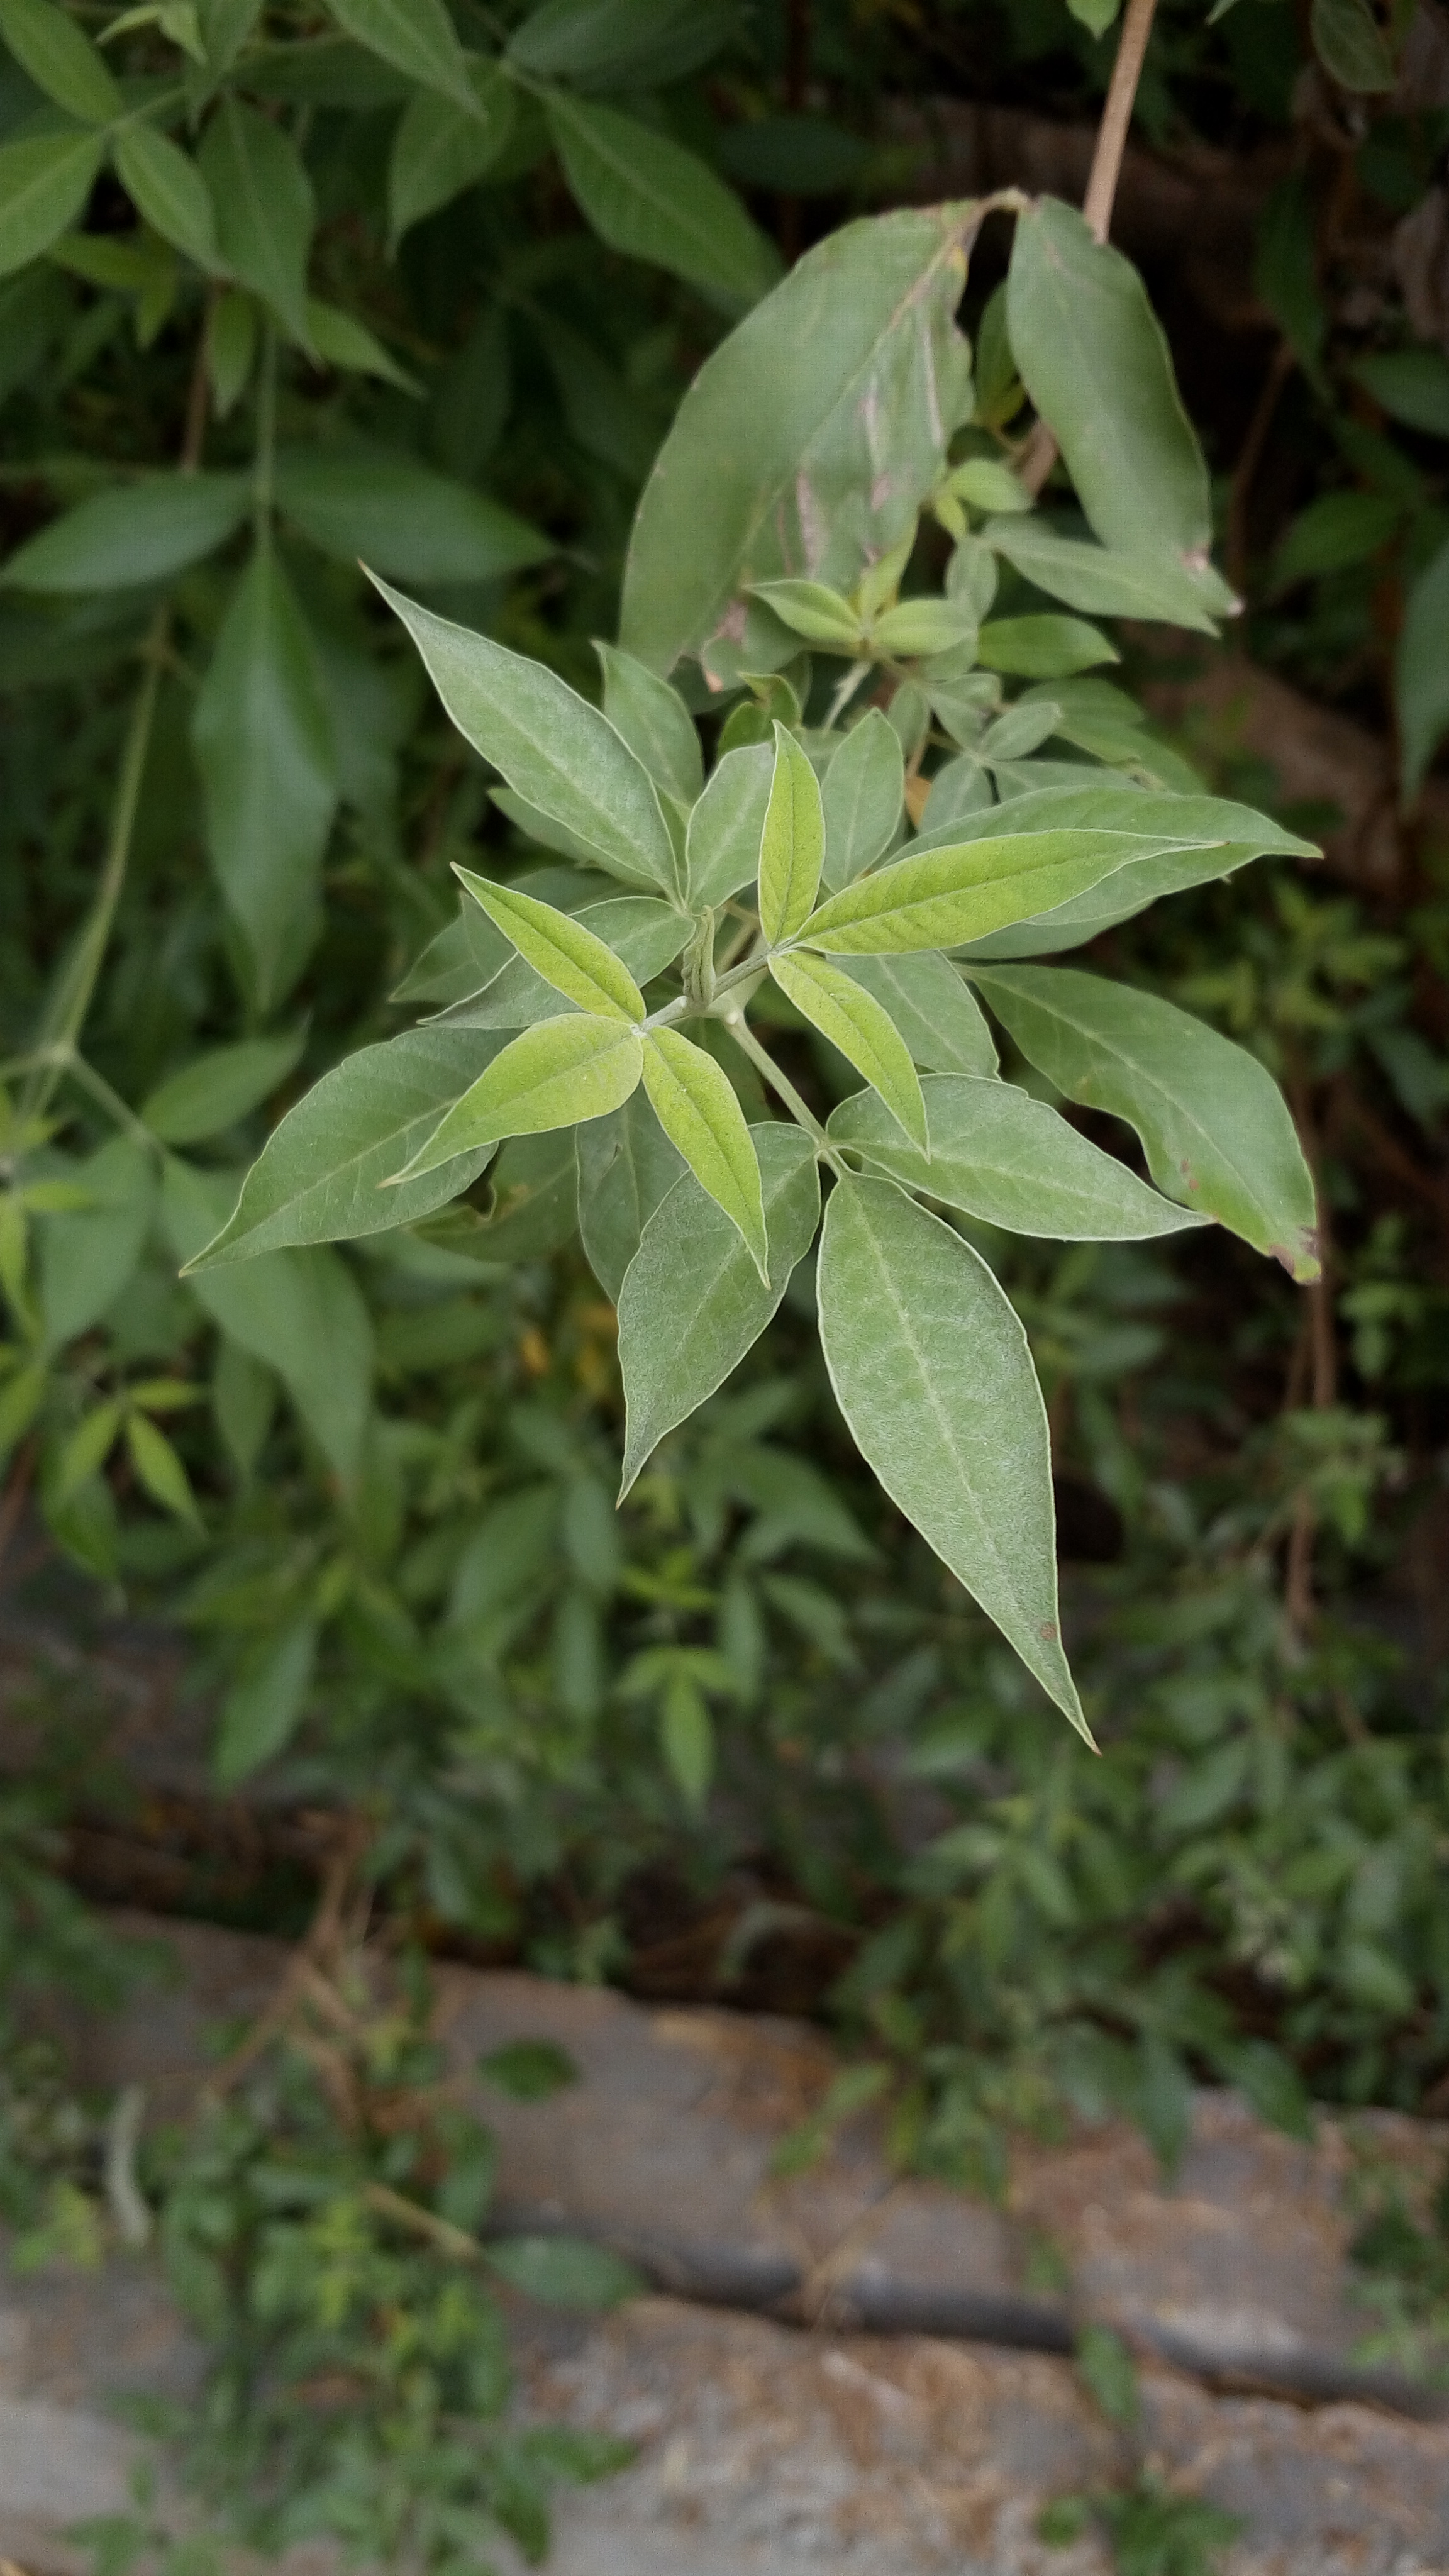 File:Tiny leaves.jpg - Wikimedia Commons